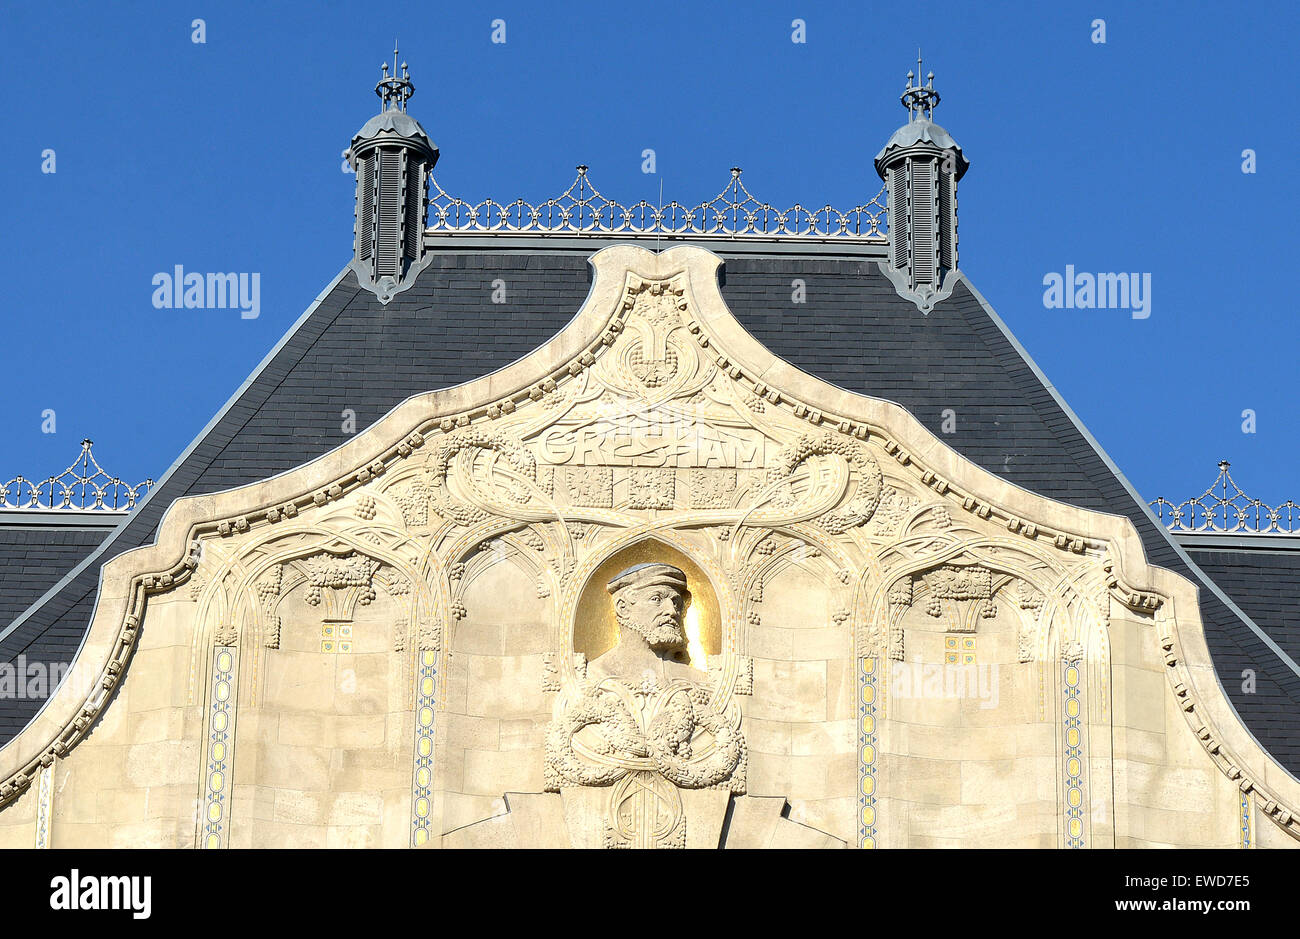 Gresham statue on front facade of Four Seasons palace hotel Budapest Hungary Stock Photo